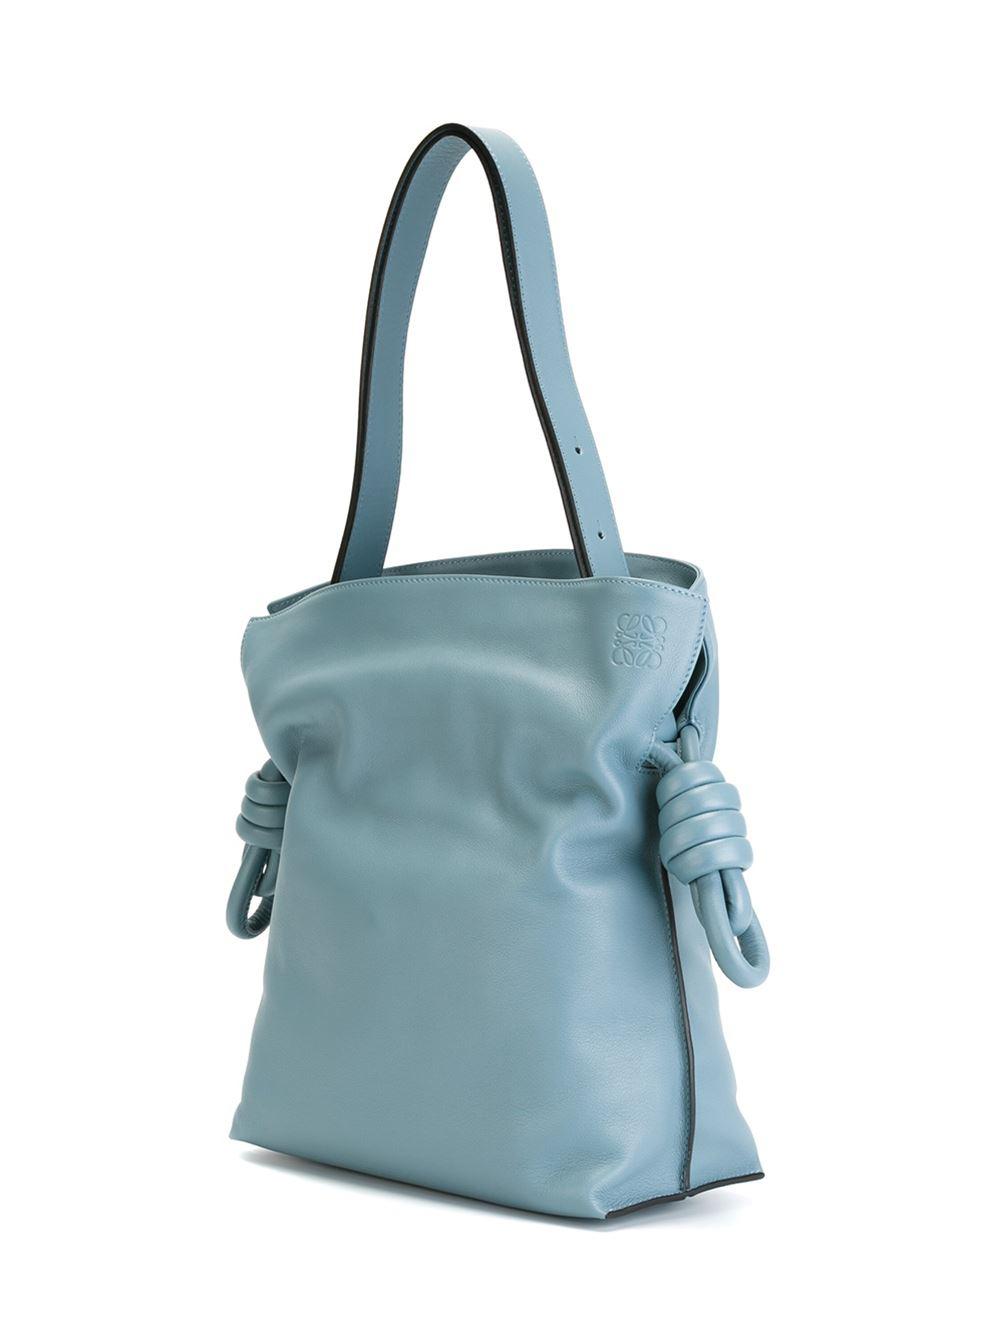 Loewe Large Flamenco Leather Shoulder Bag in Blue - Lyst